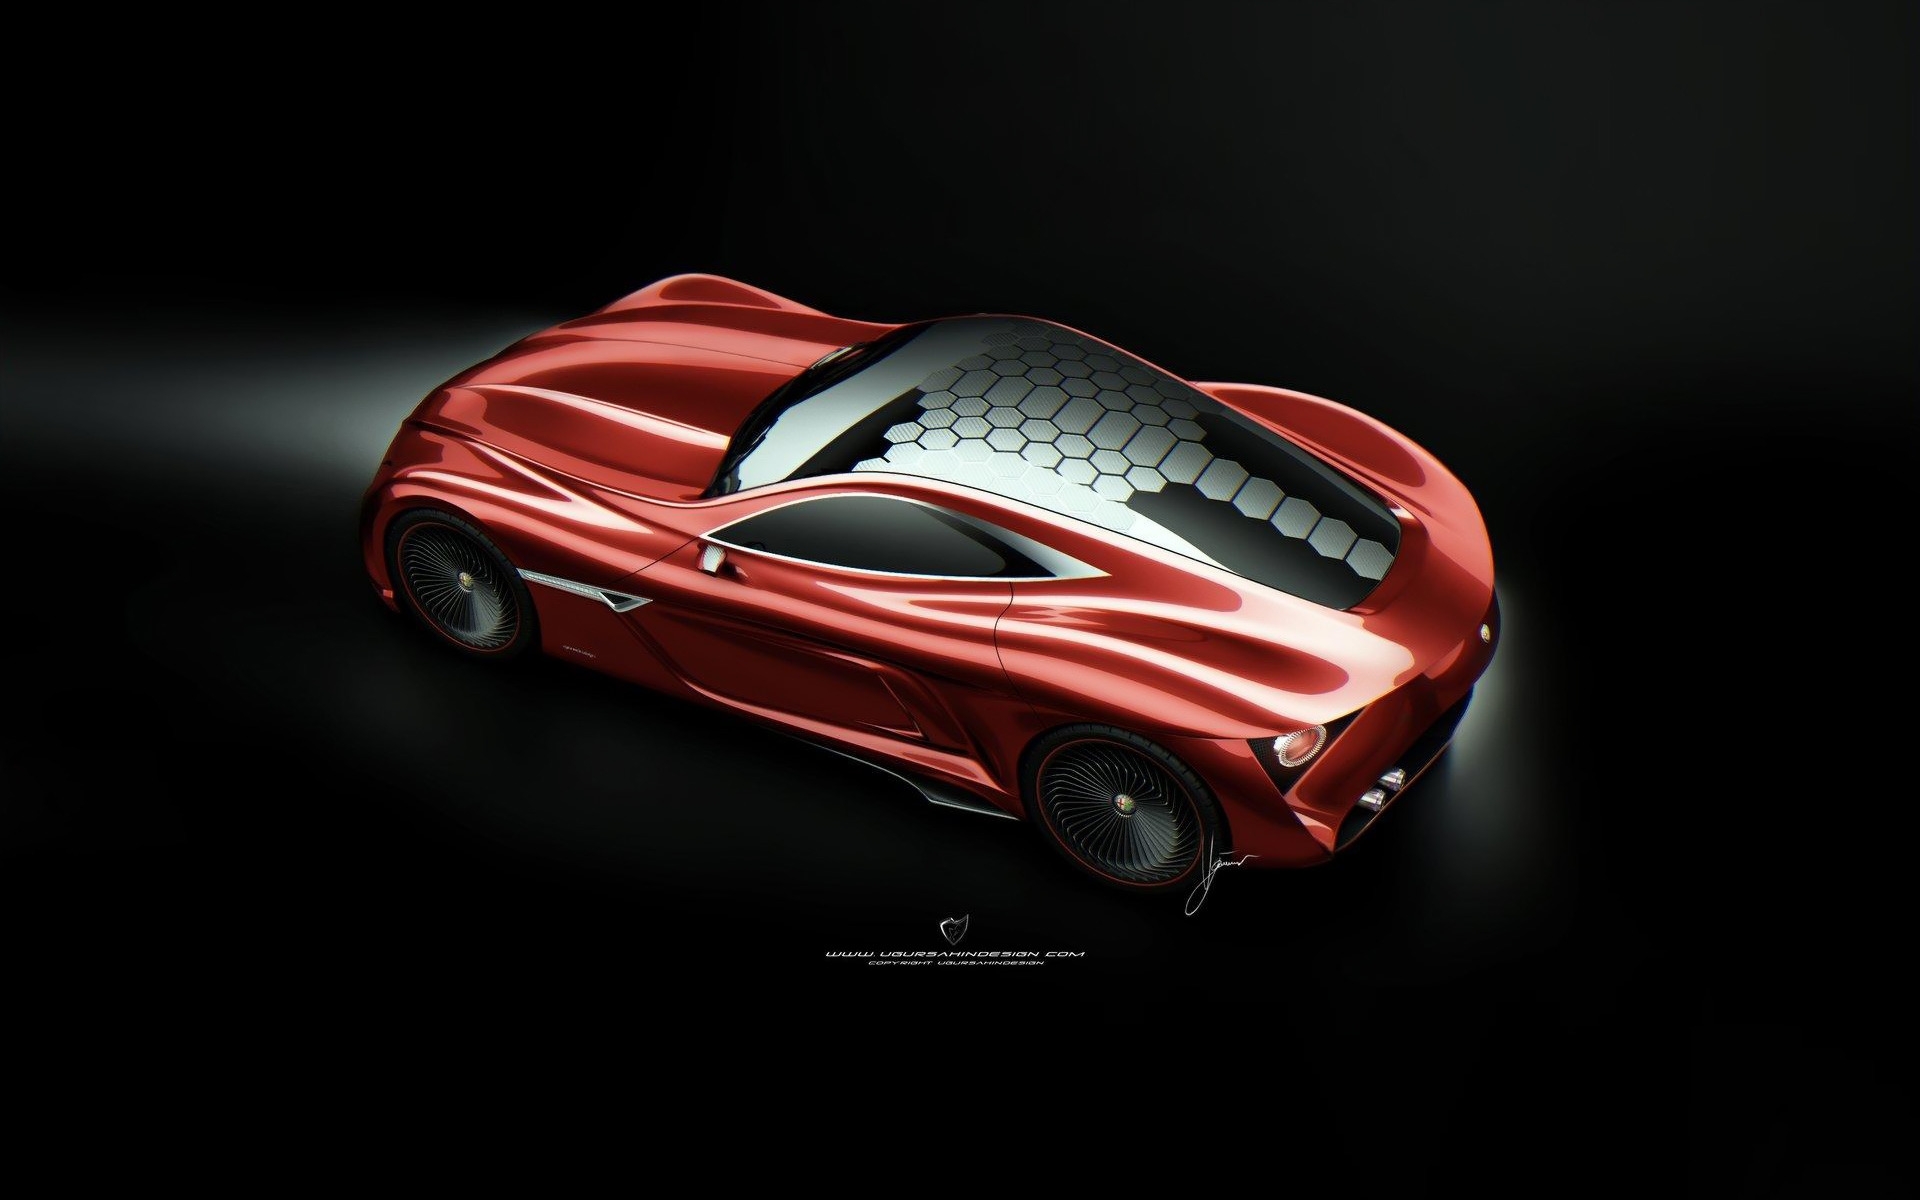 Amazing Alfa Romeo Concept for 1920 x 1200 widescreen resolution